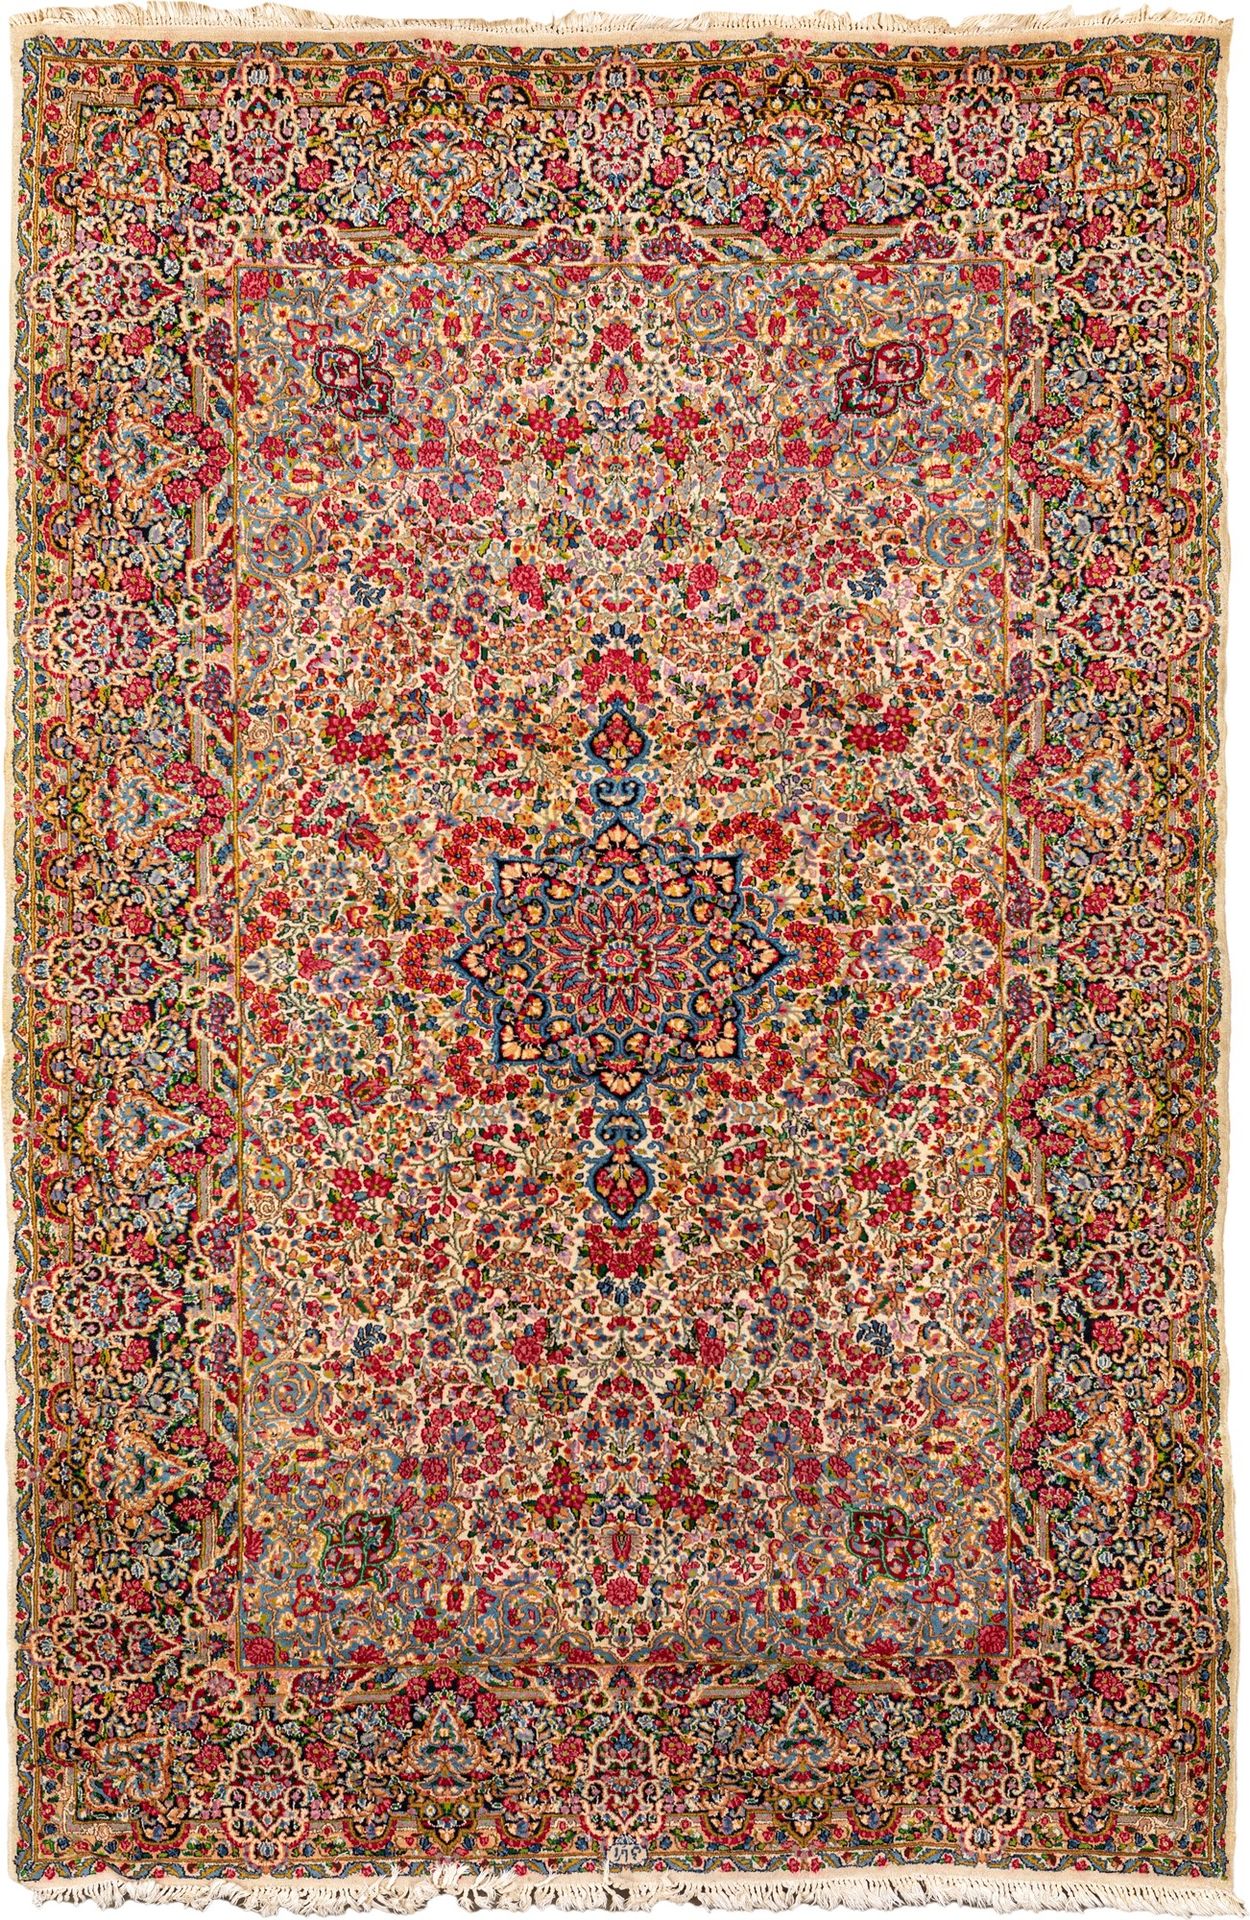 Kirman Persian rug with dense floral pattern cm 270x182